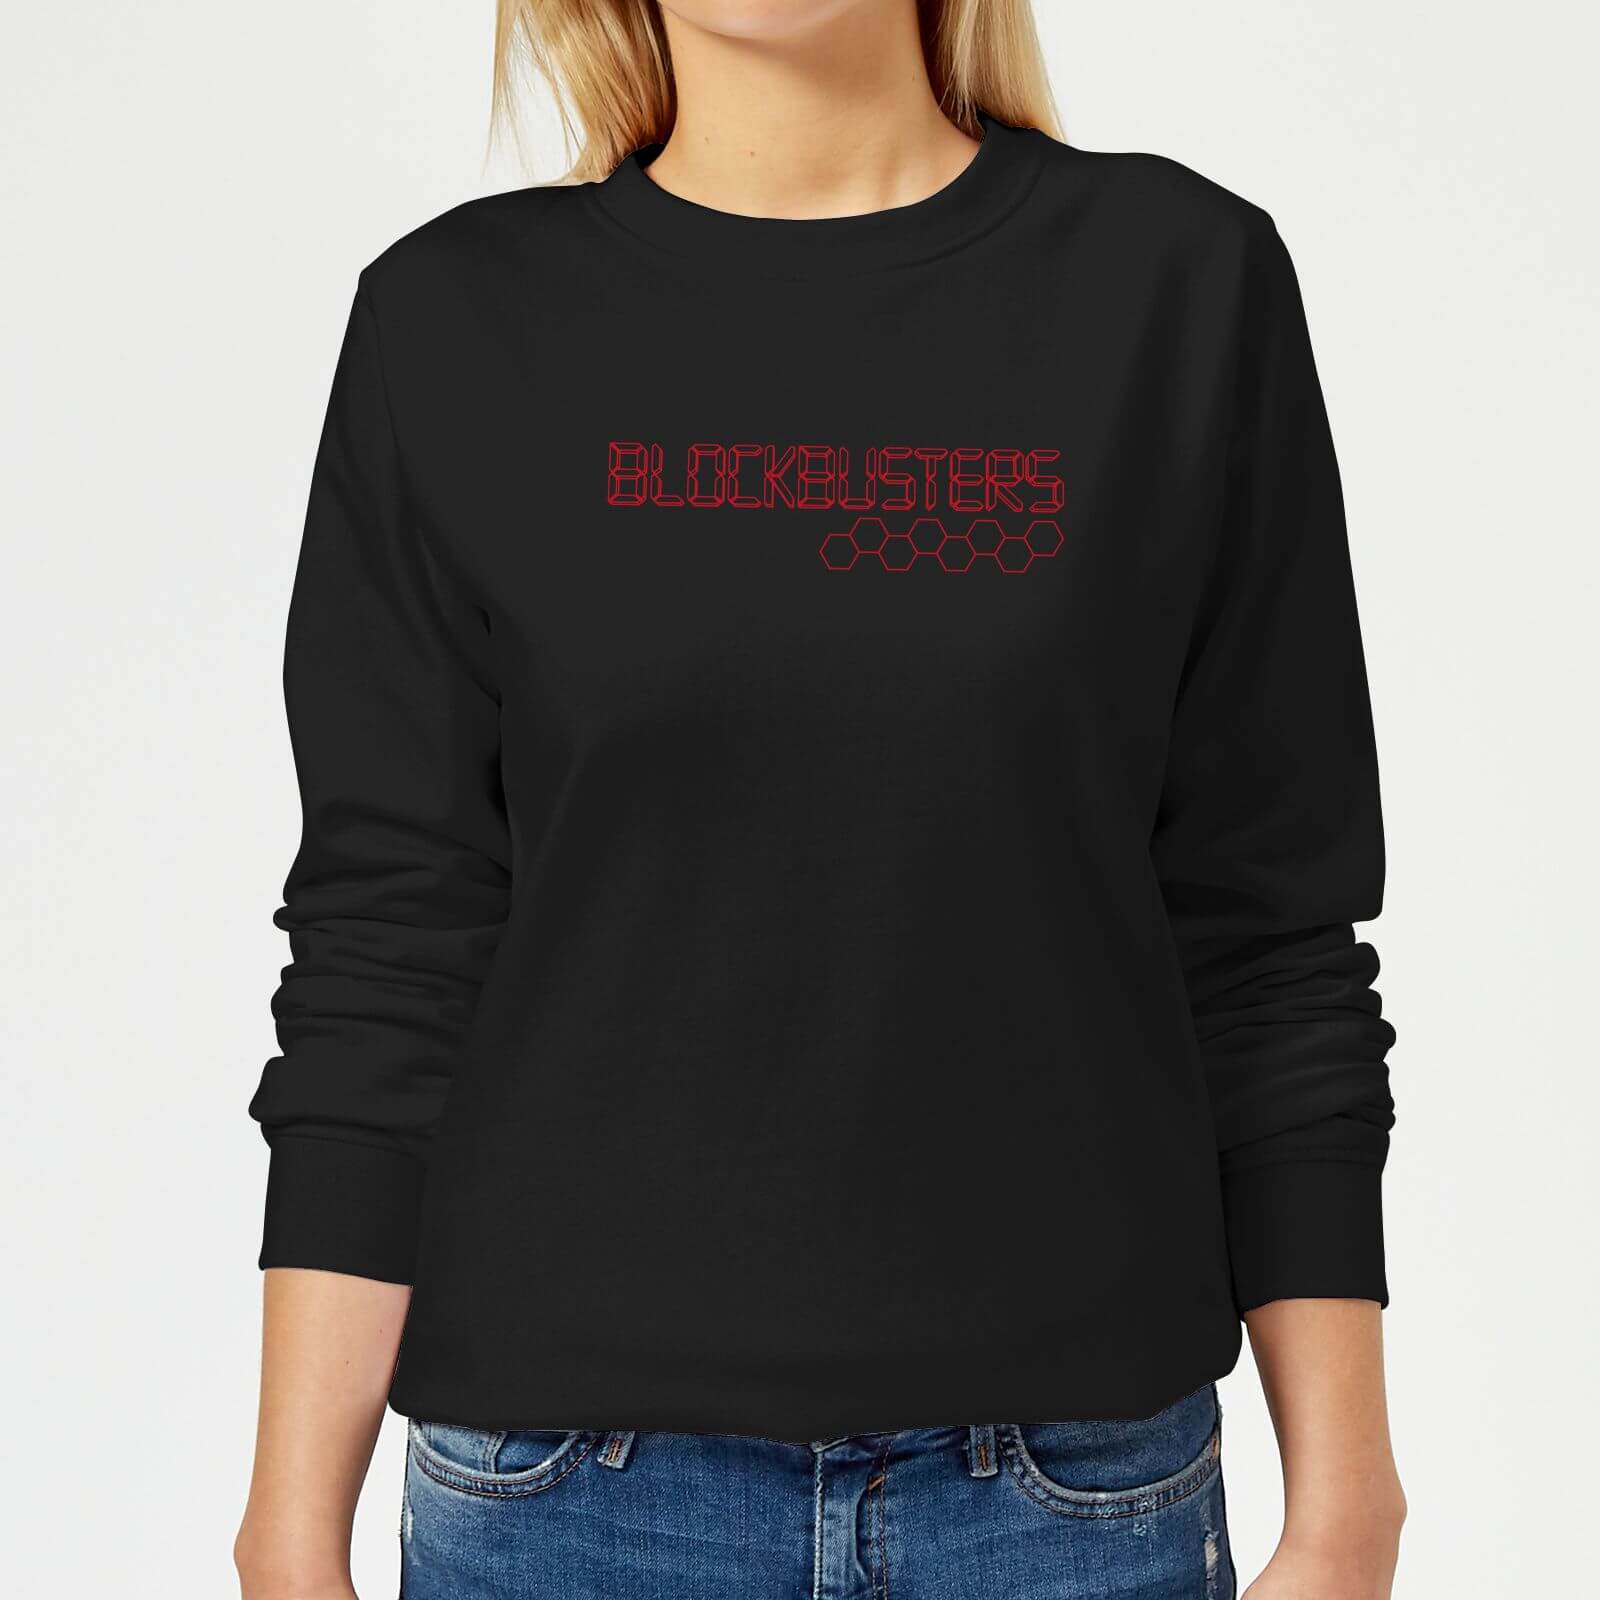 Blockbusters Logo Women's Sweatshirt - Black - XS - Black